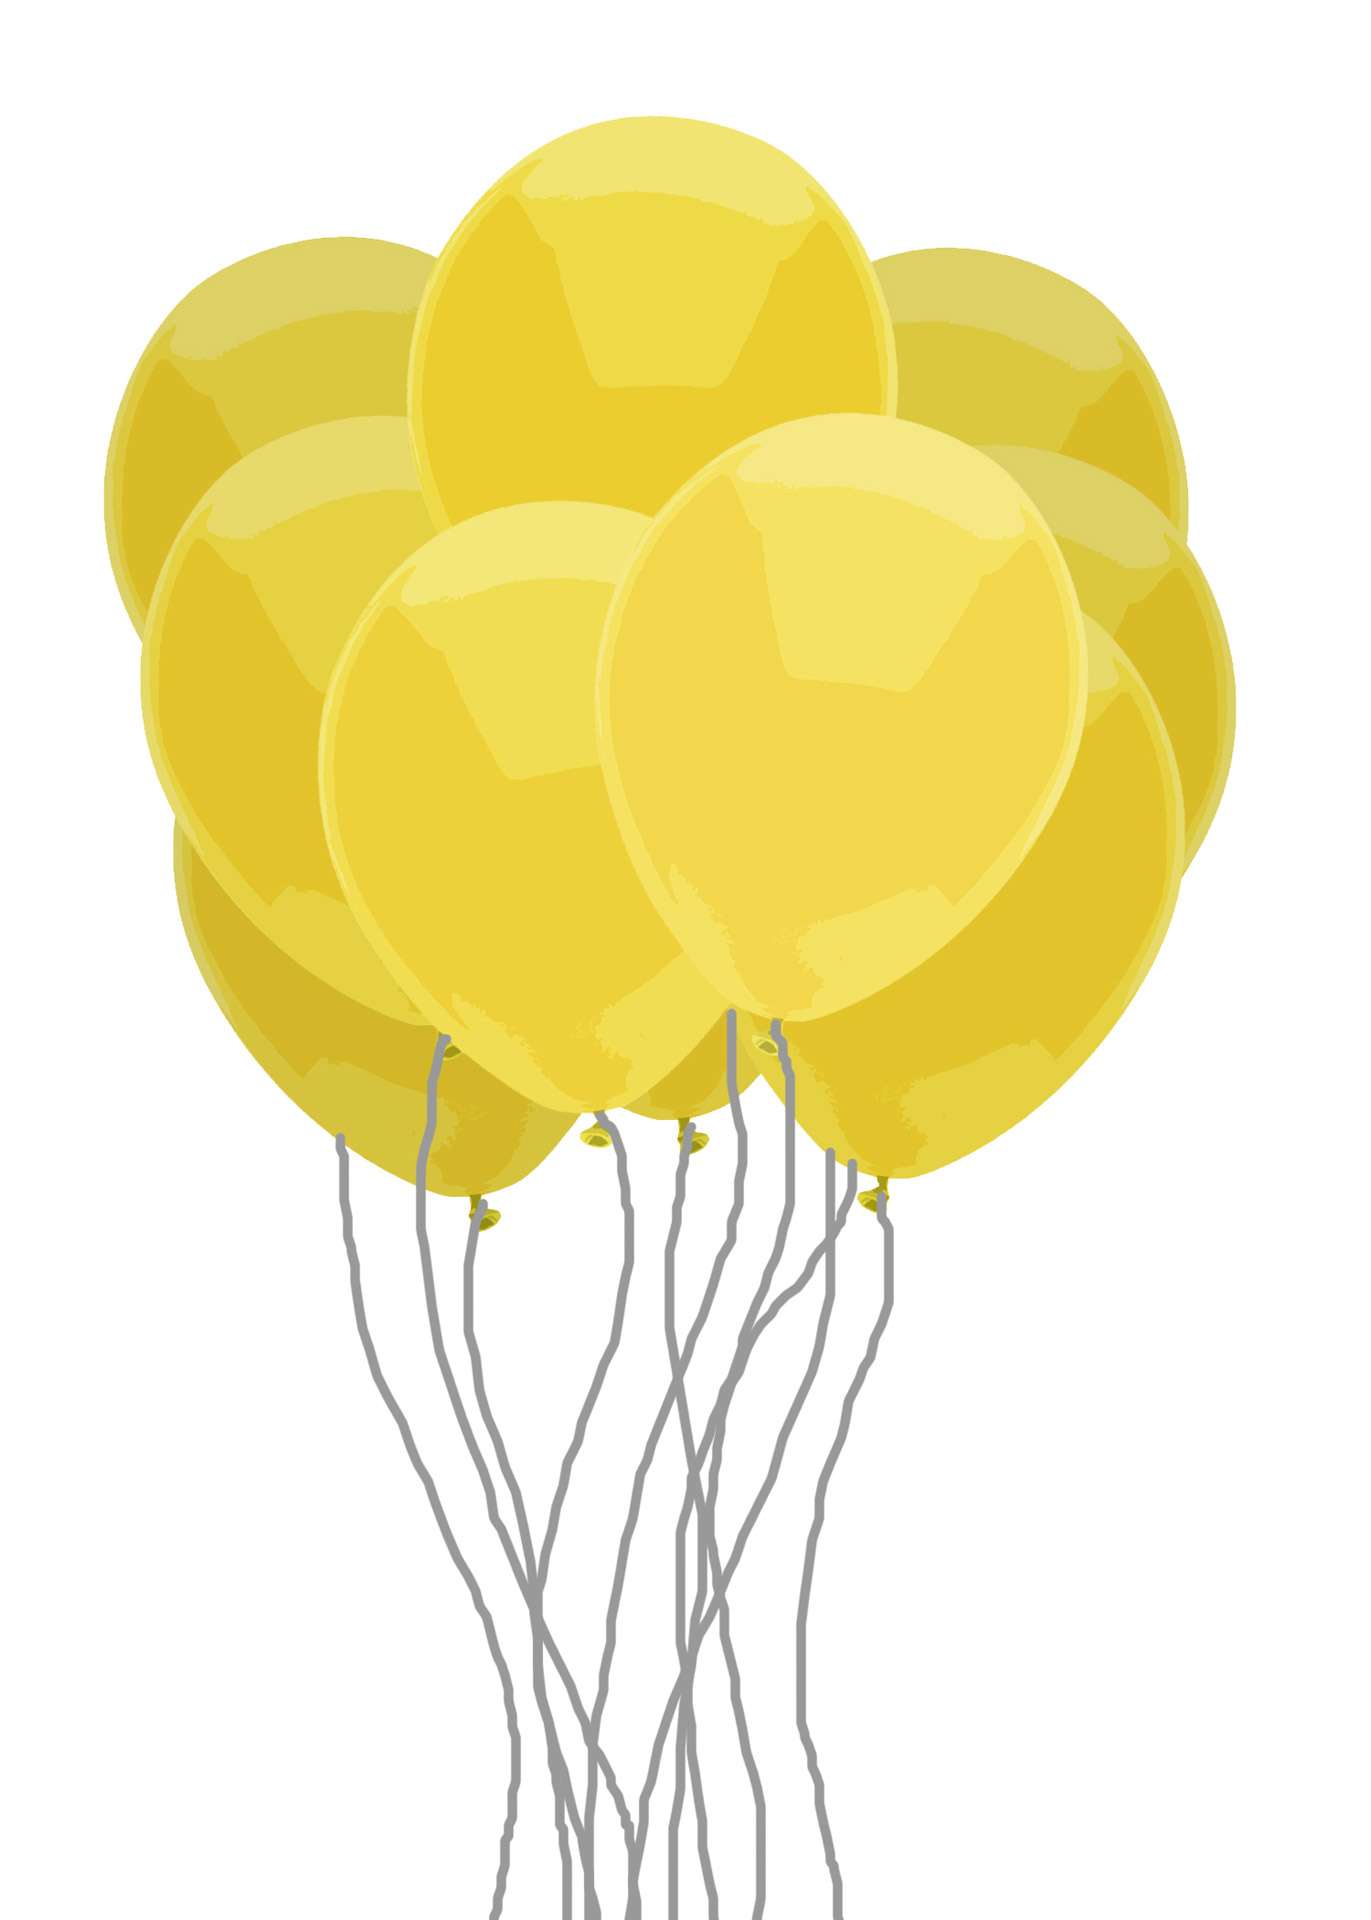 clipart yellow balloons - photo #27